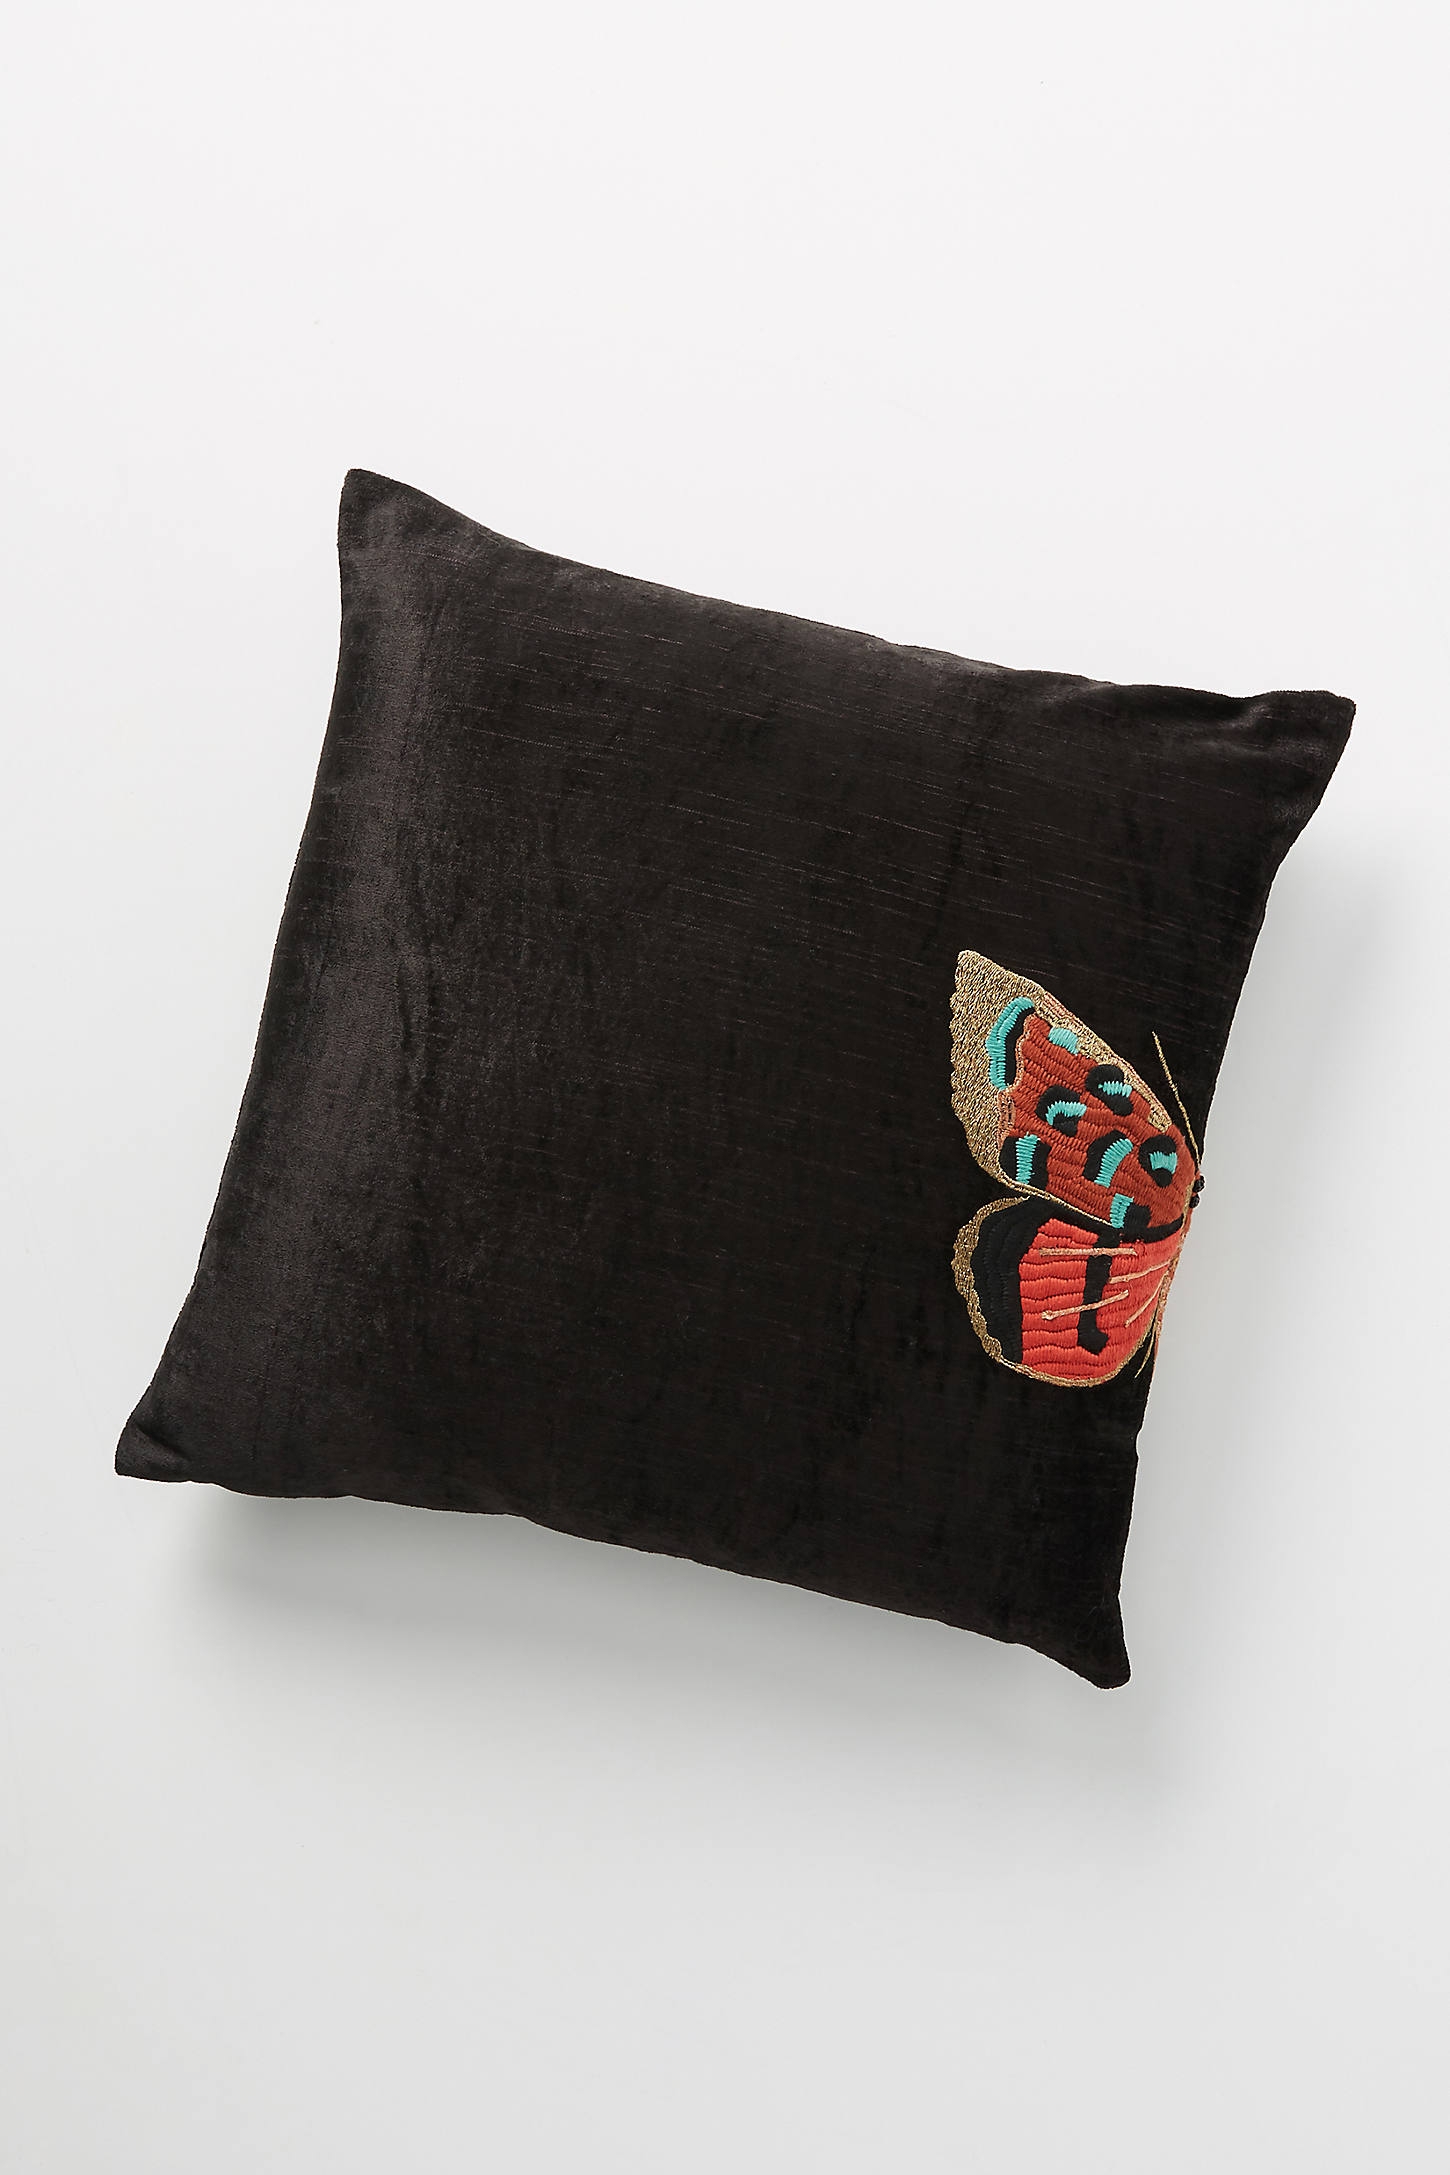 Embellished Isadora Pillow - Image 0